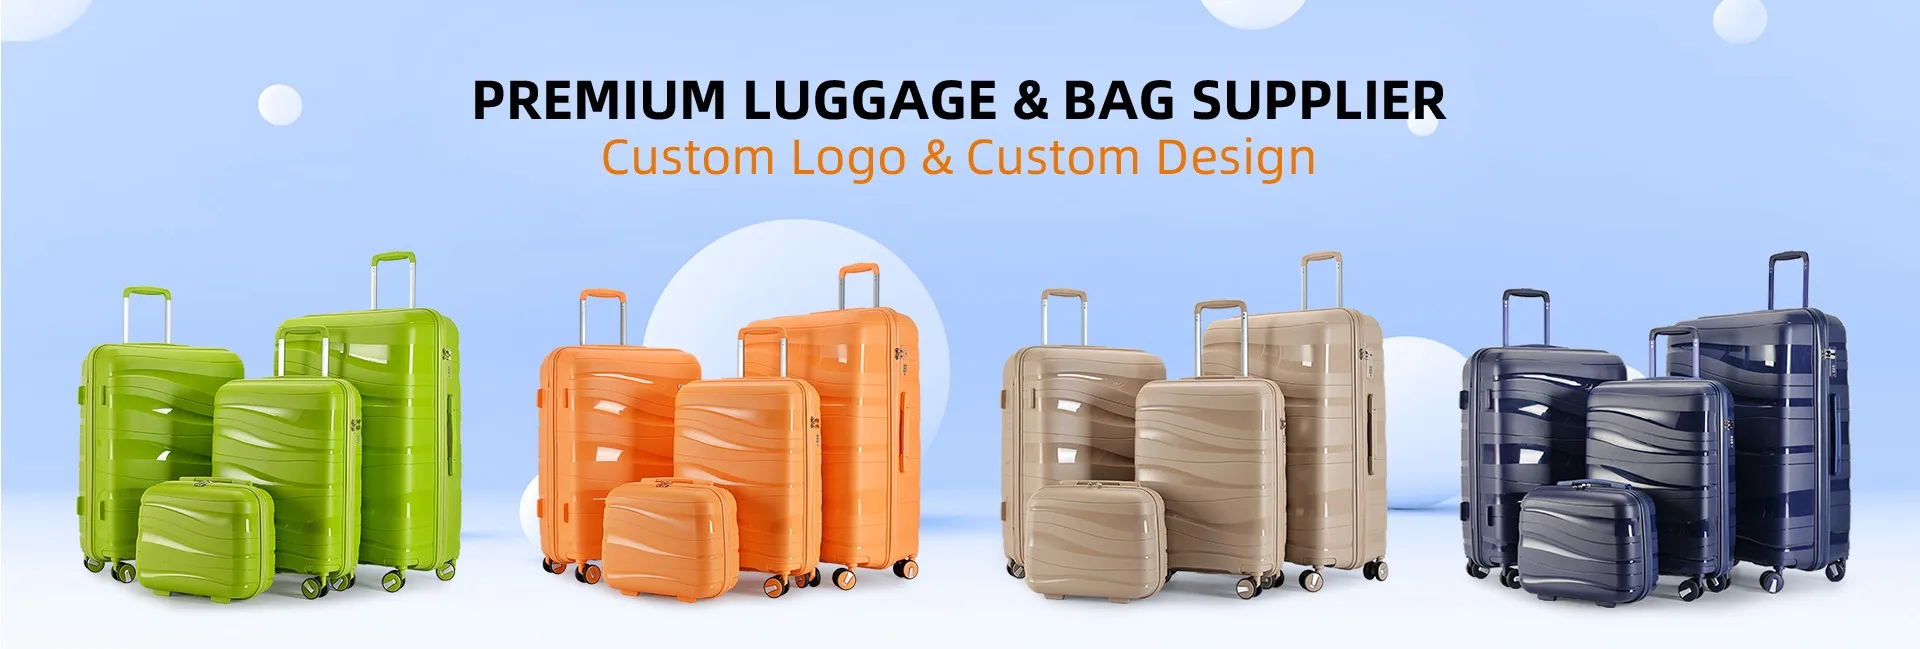 Shenzhen Resena Luggage & Bag Co., Ltd.